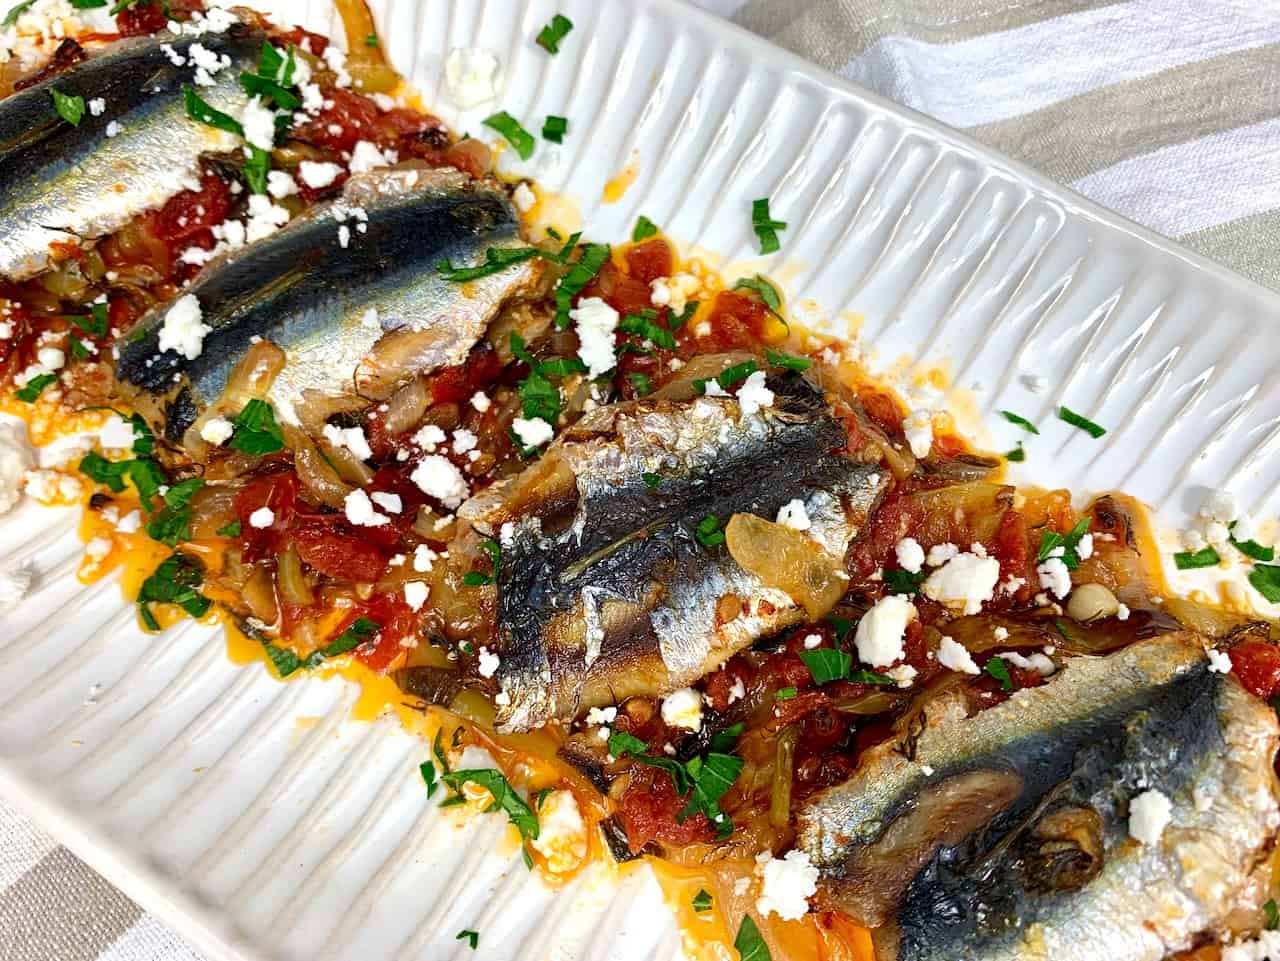 Stuffed sardine featured